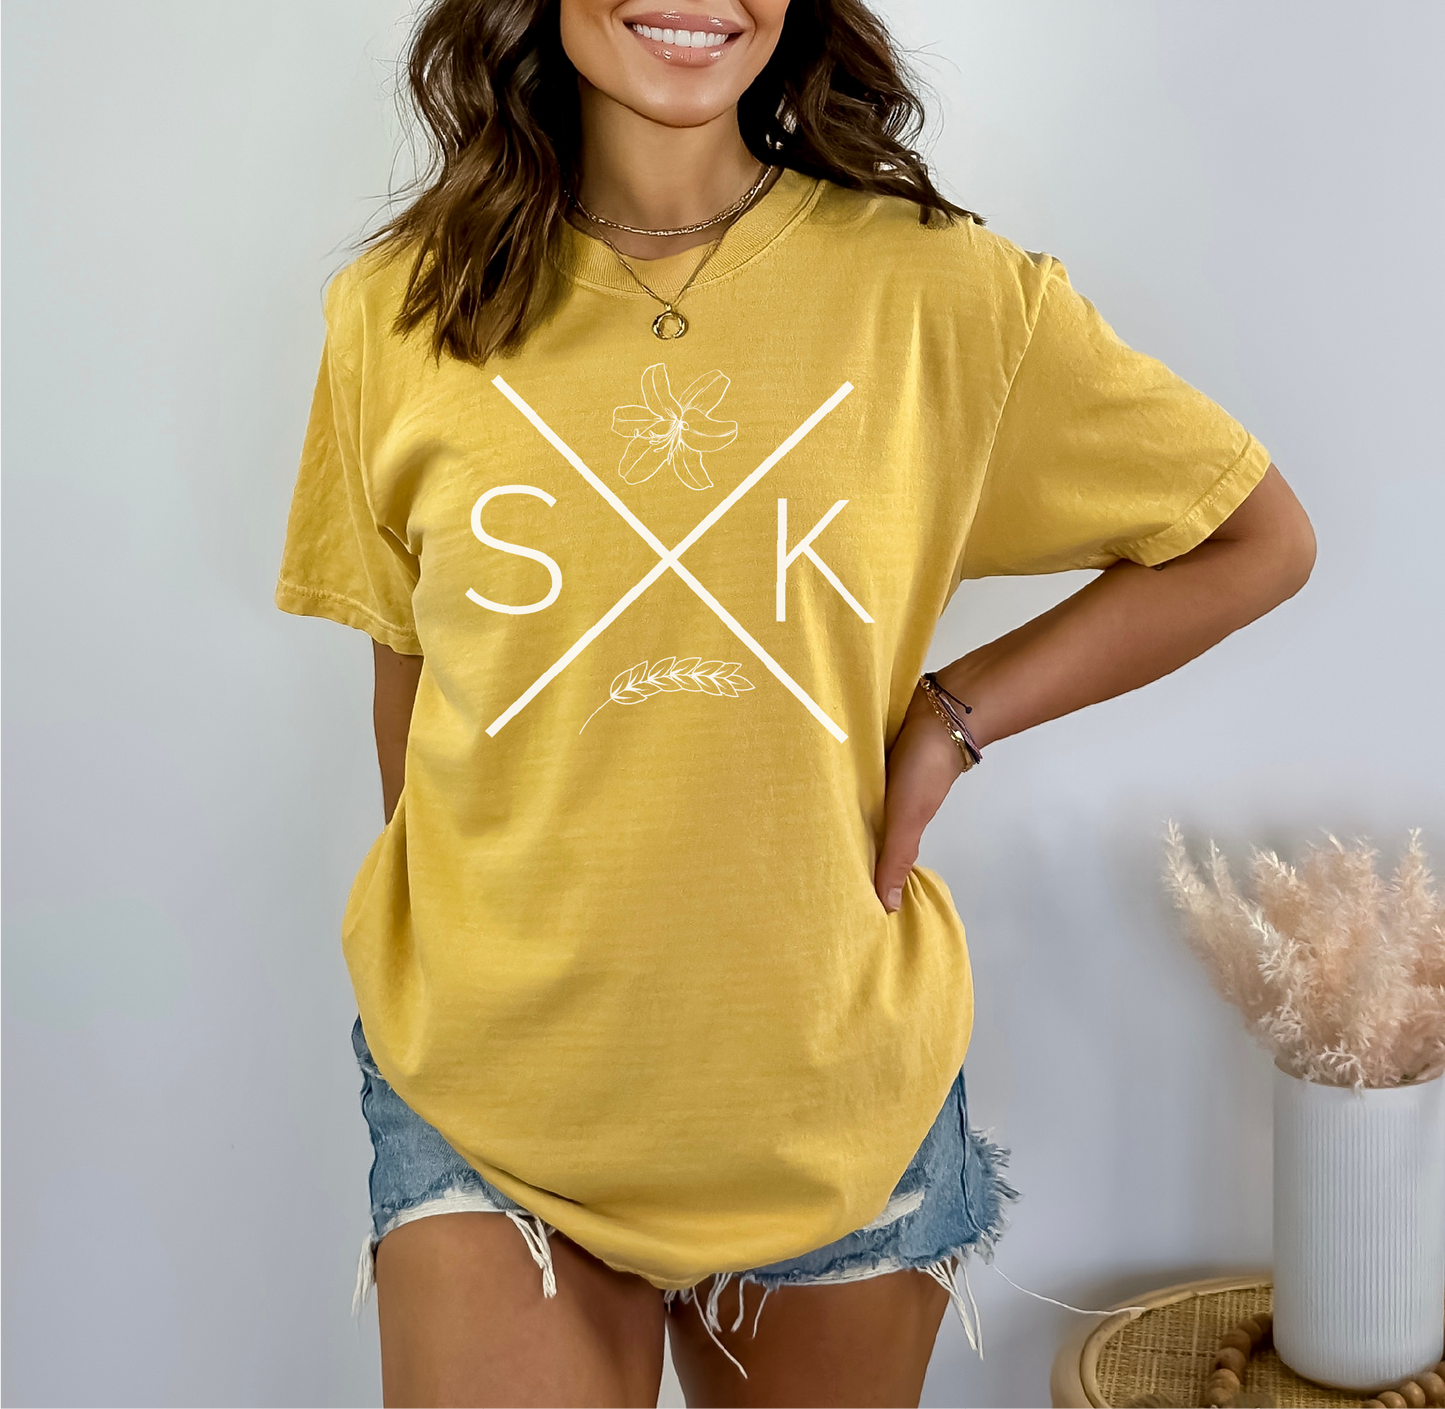 SASK X Unisex T-shirt | Saskatchewan Apparel